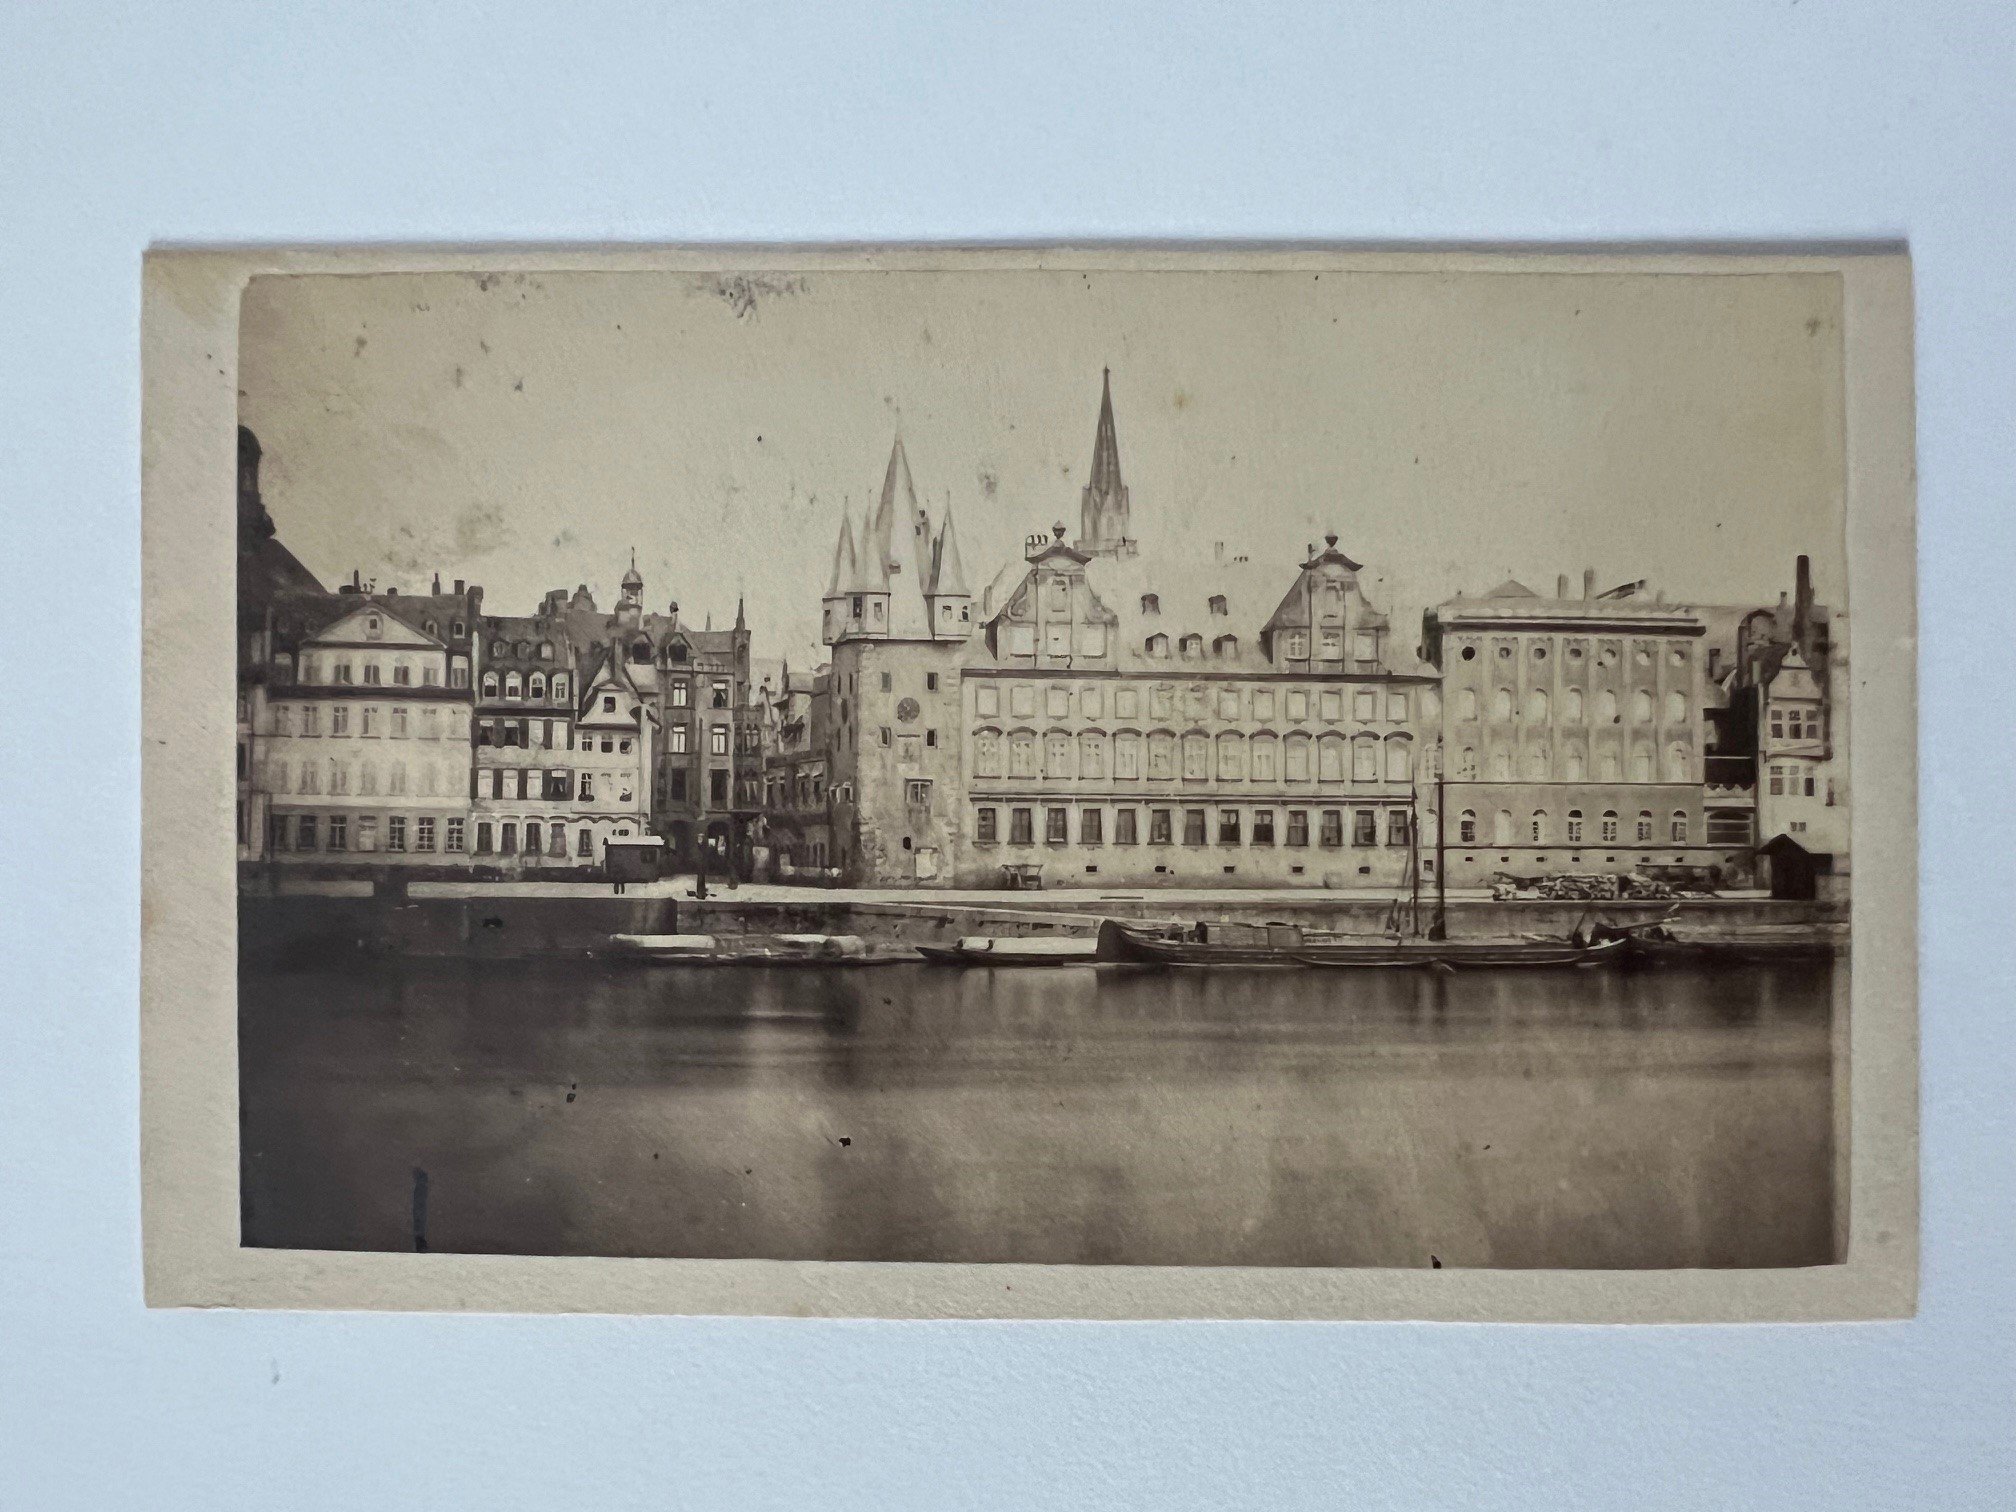 CdV, B. Sperling, Frankfurt, Mainquai, ca. 1864. (Taunus-Rhein-Main - Regionalgeschichtliche Sammlung Dr. Stefan Naas CC BY-NC-SA)